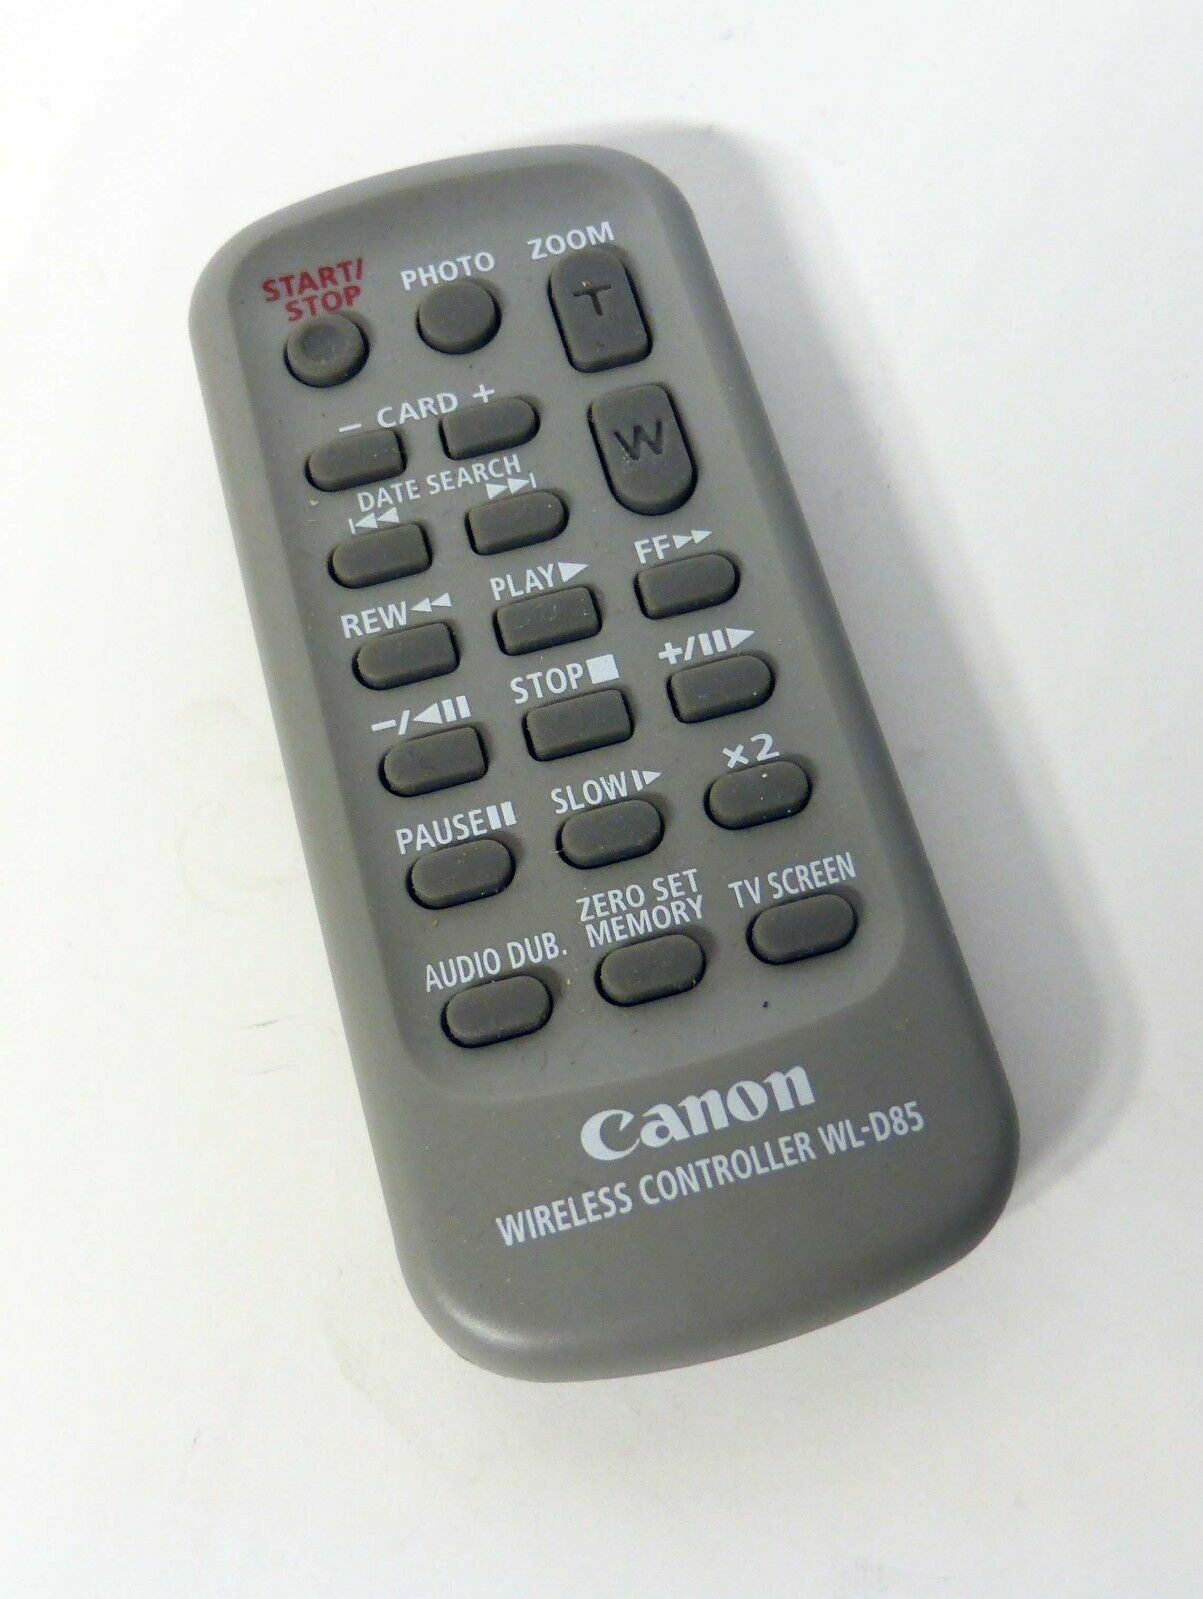 Canon wireless remote control ler WL D85 DC20 DC230 HG10 DC40 ...